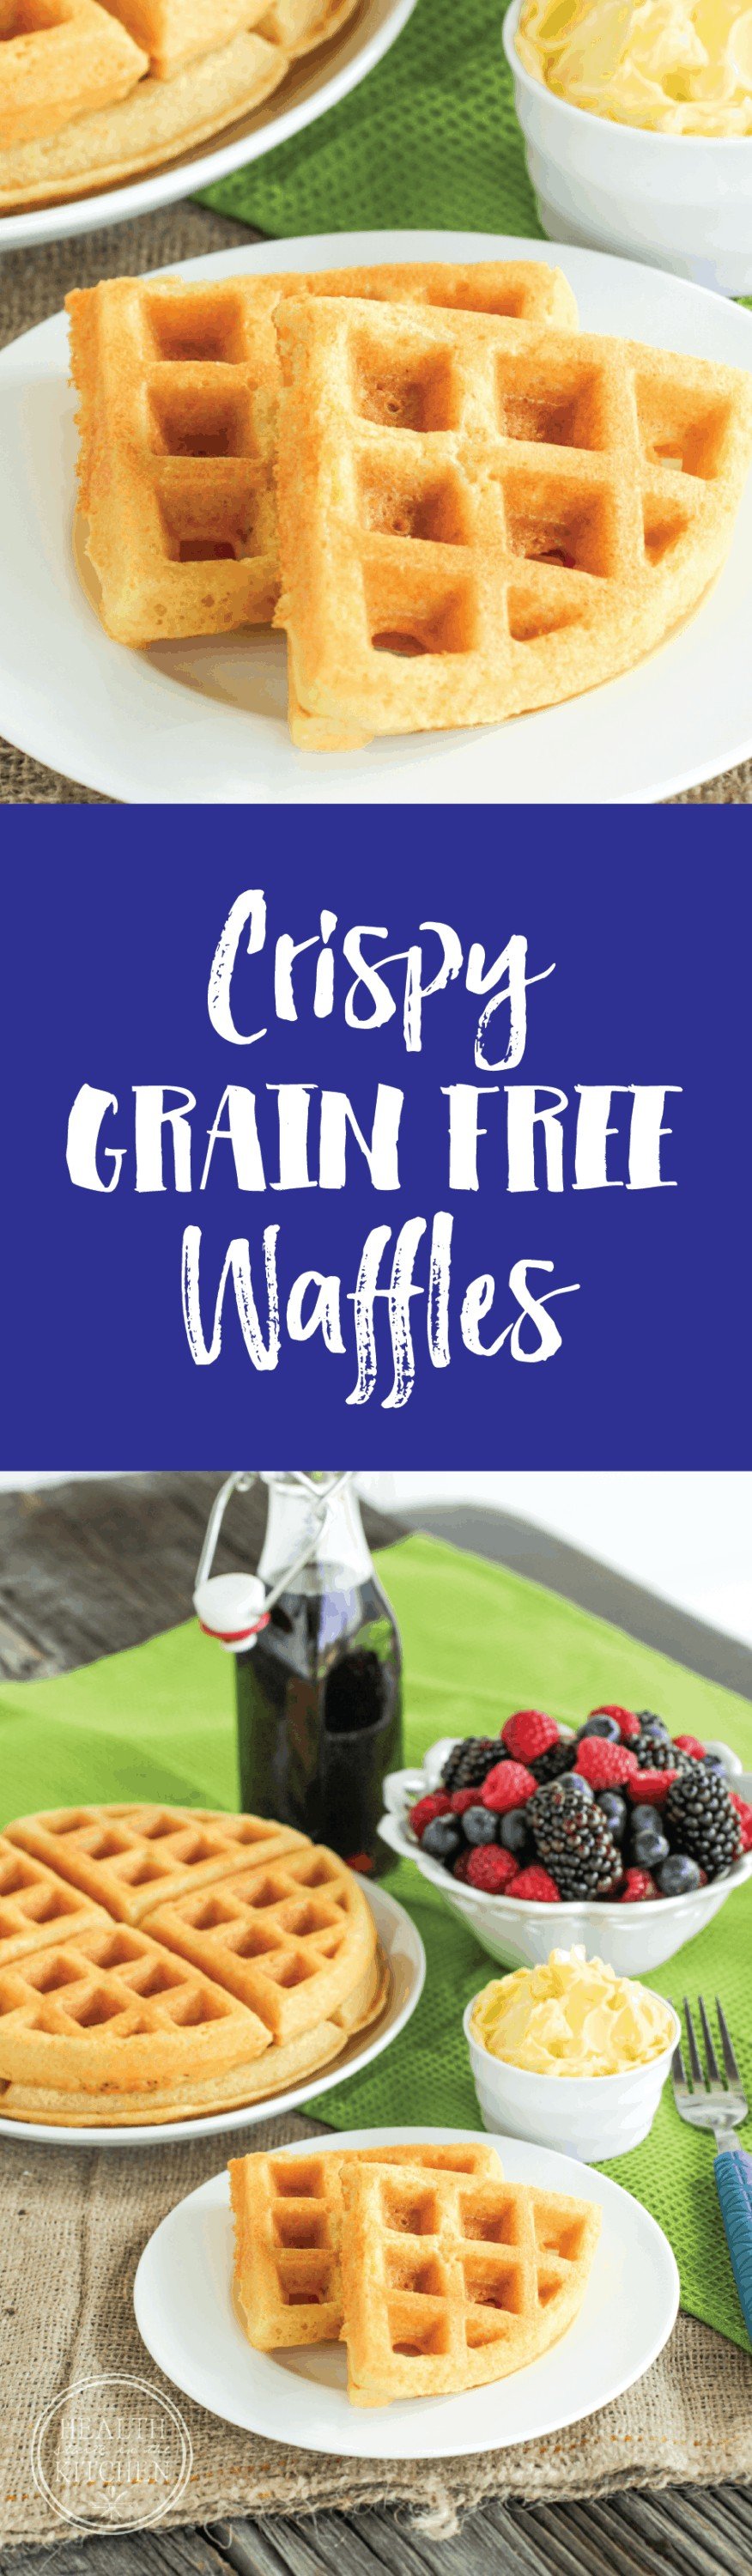 Crispy Grain Free Waffles